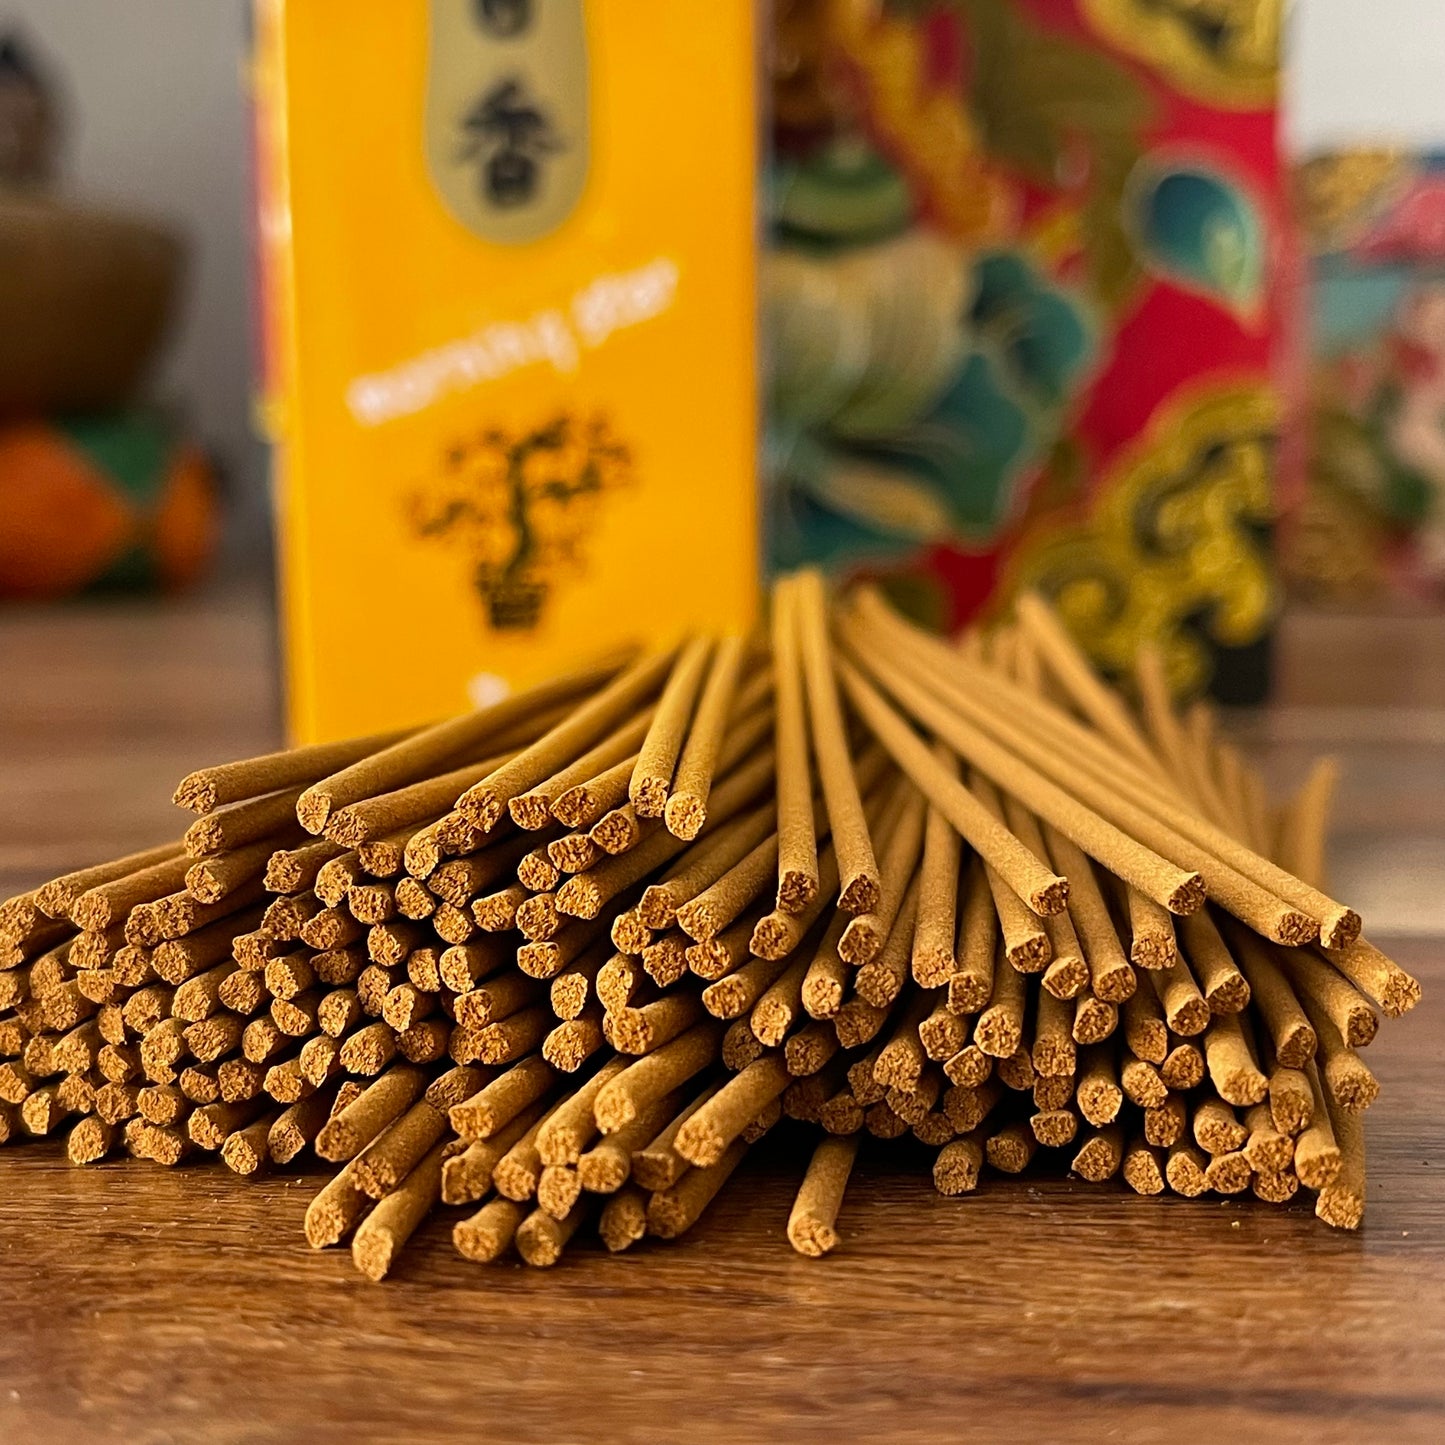 Morning Star Amber Incense 200 sticks